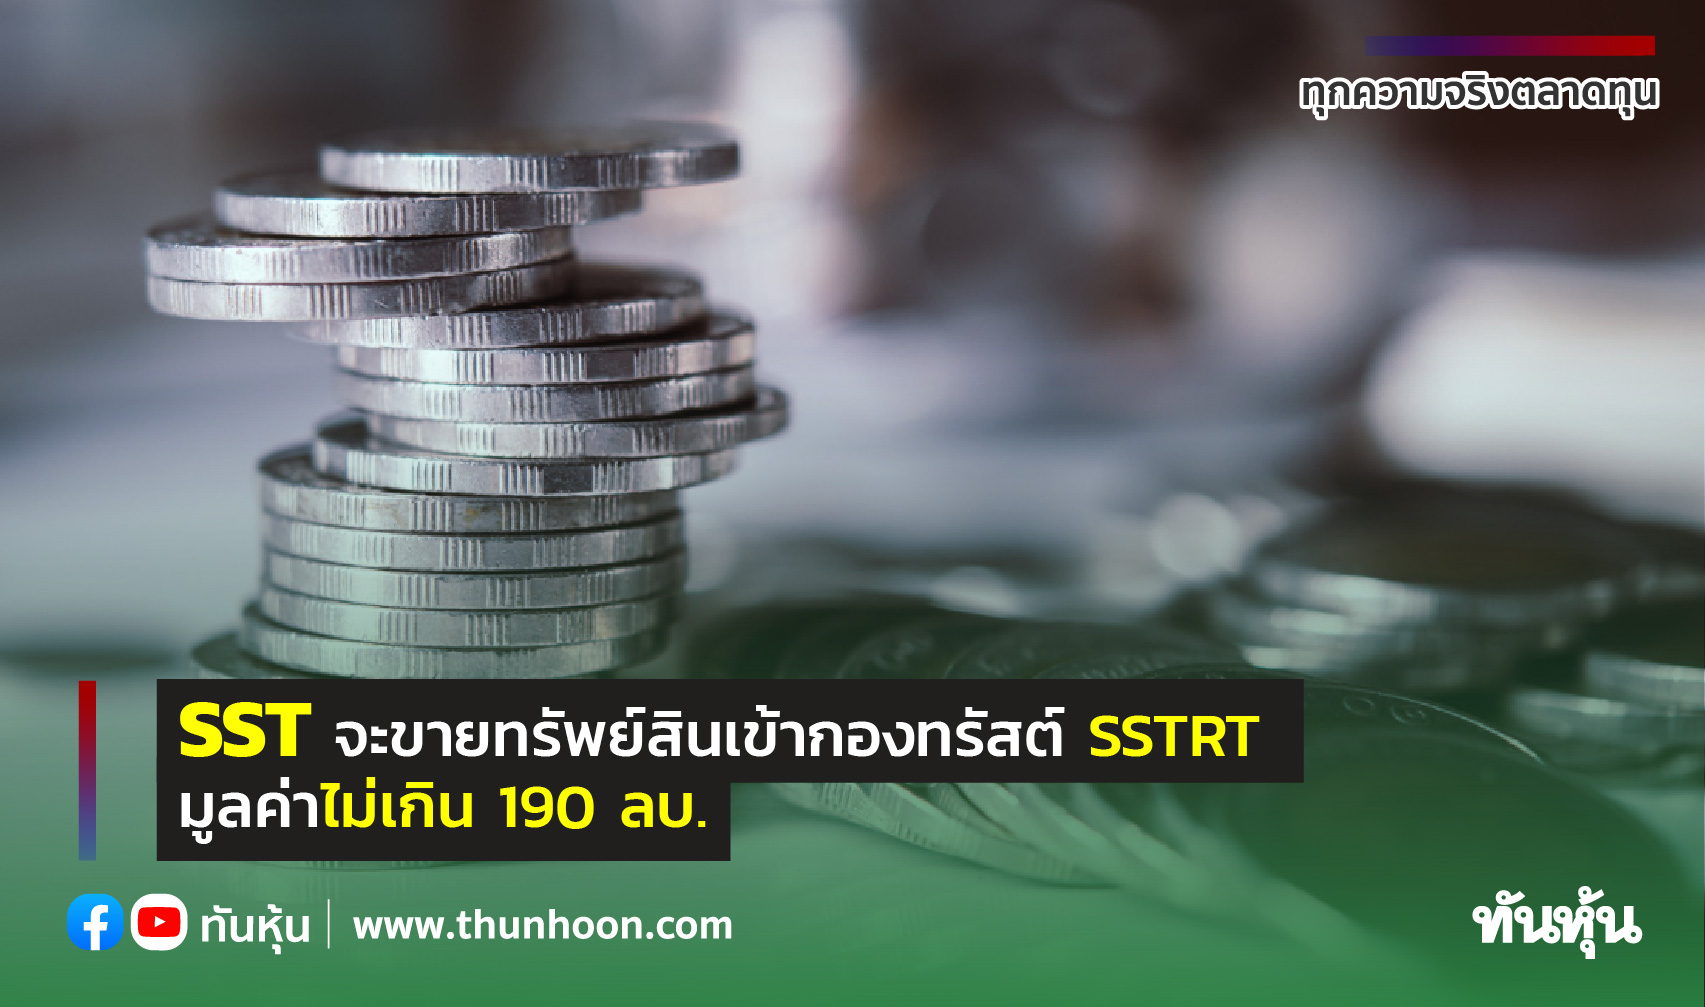 SST จะขายทรัพย์สินเข้ากองทรัสต์ SSTRT มูลค่าไม่เกิน 190 ลบ. 